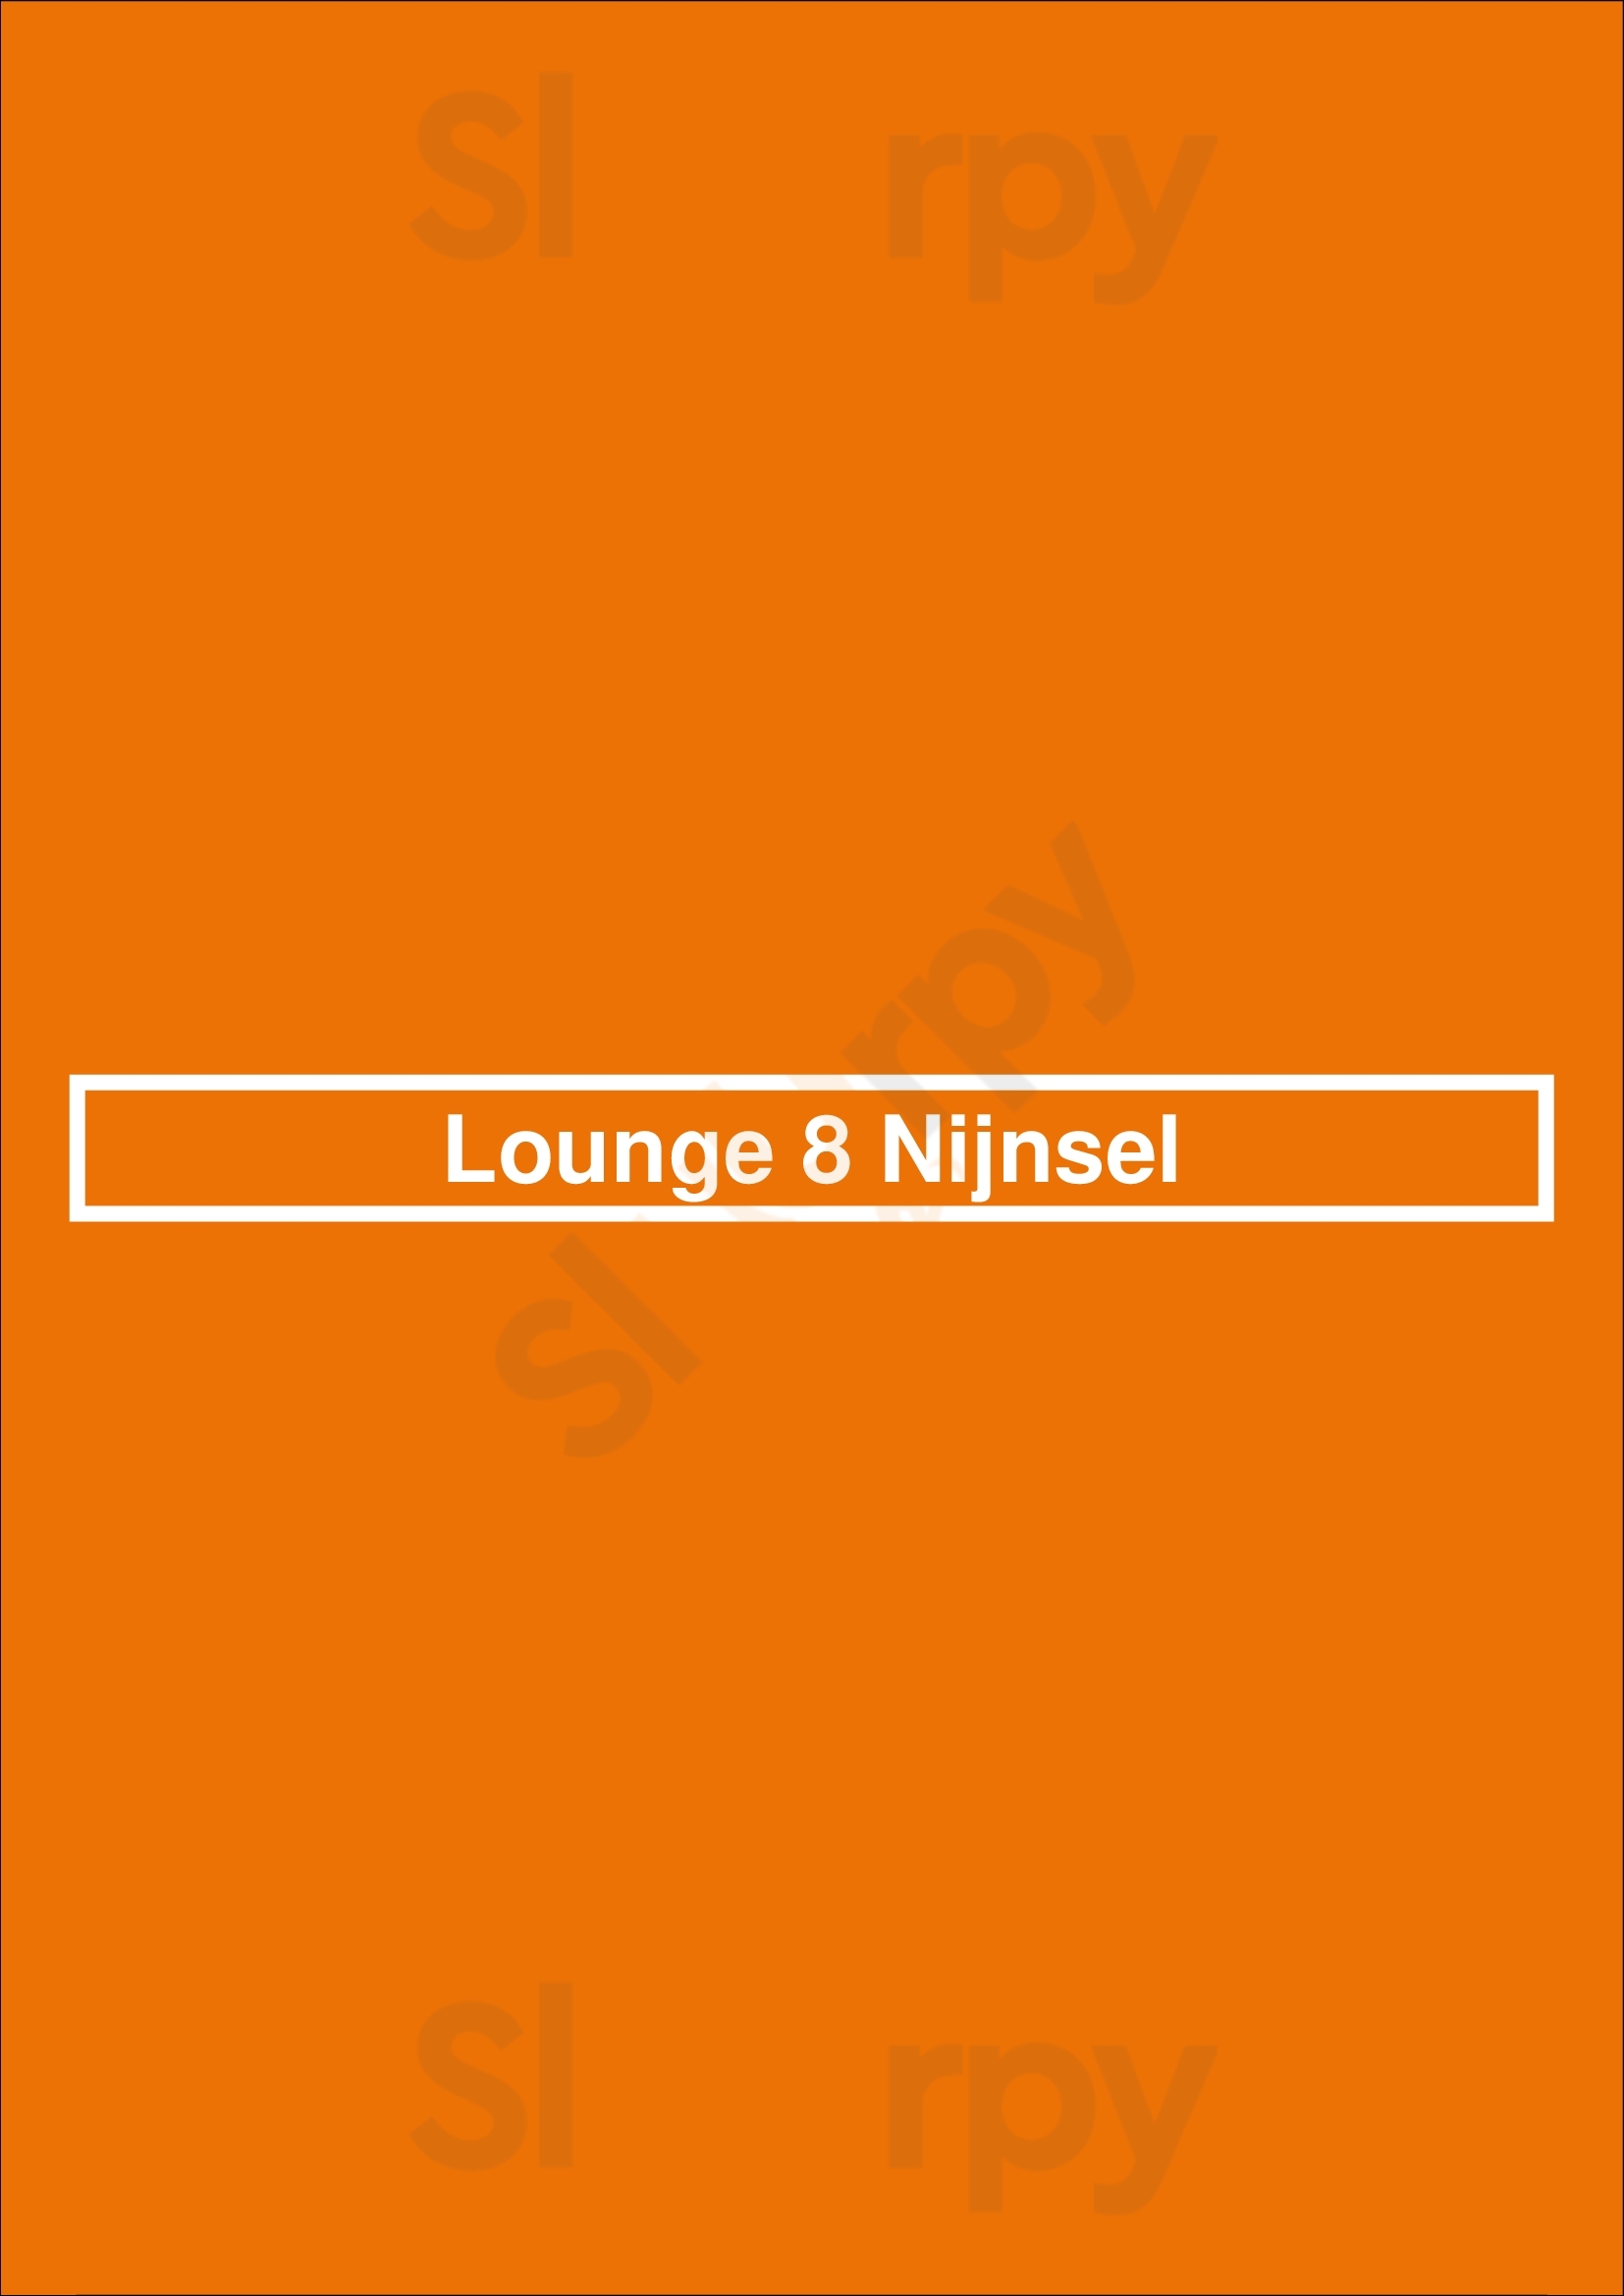 Lounge 8 Nijnsel Sint-Oedenrode Menu - 1